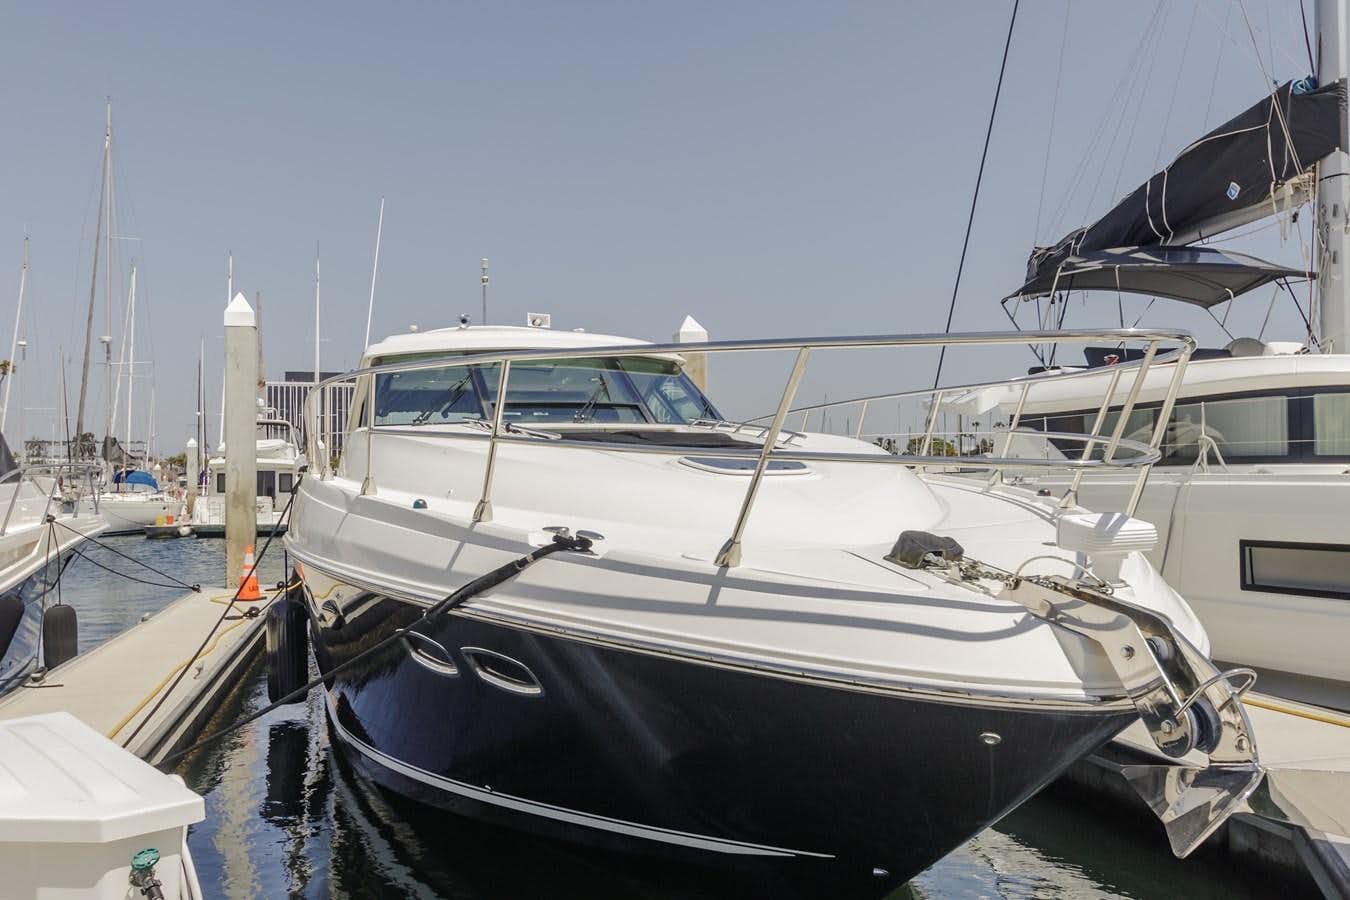 Brigg sea
Yacht for Sale